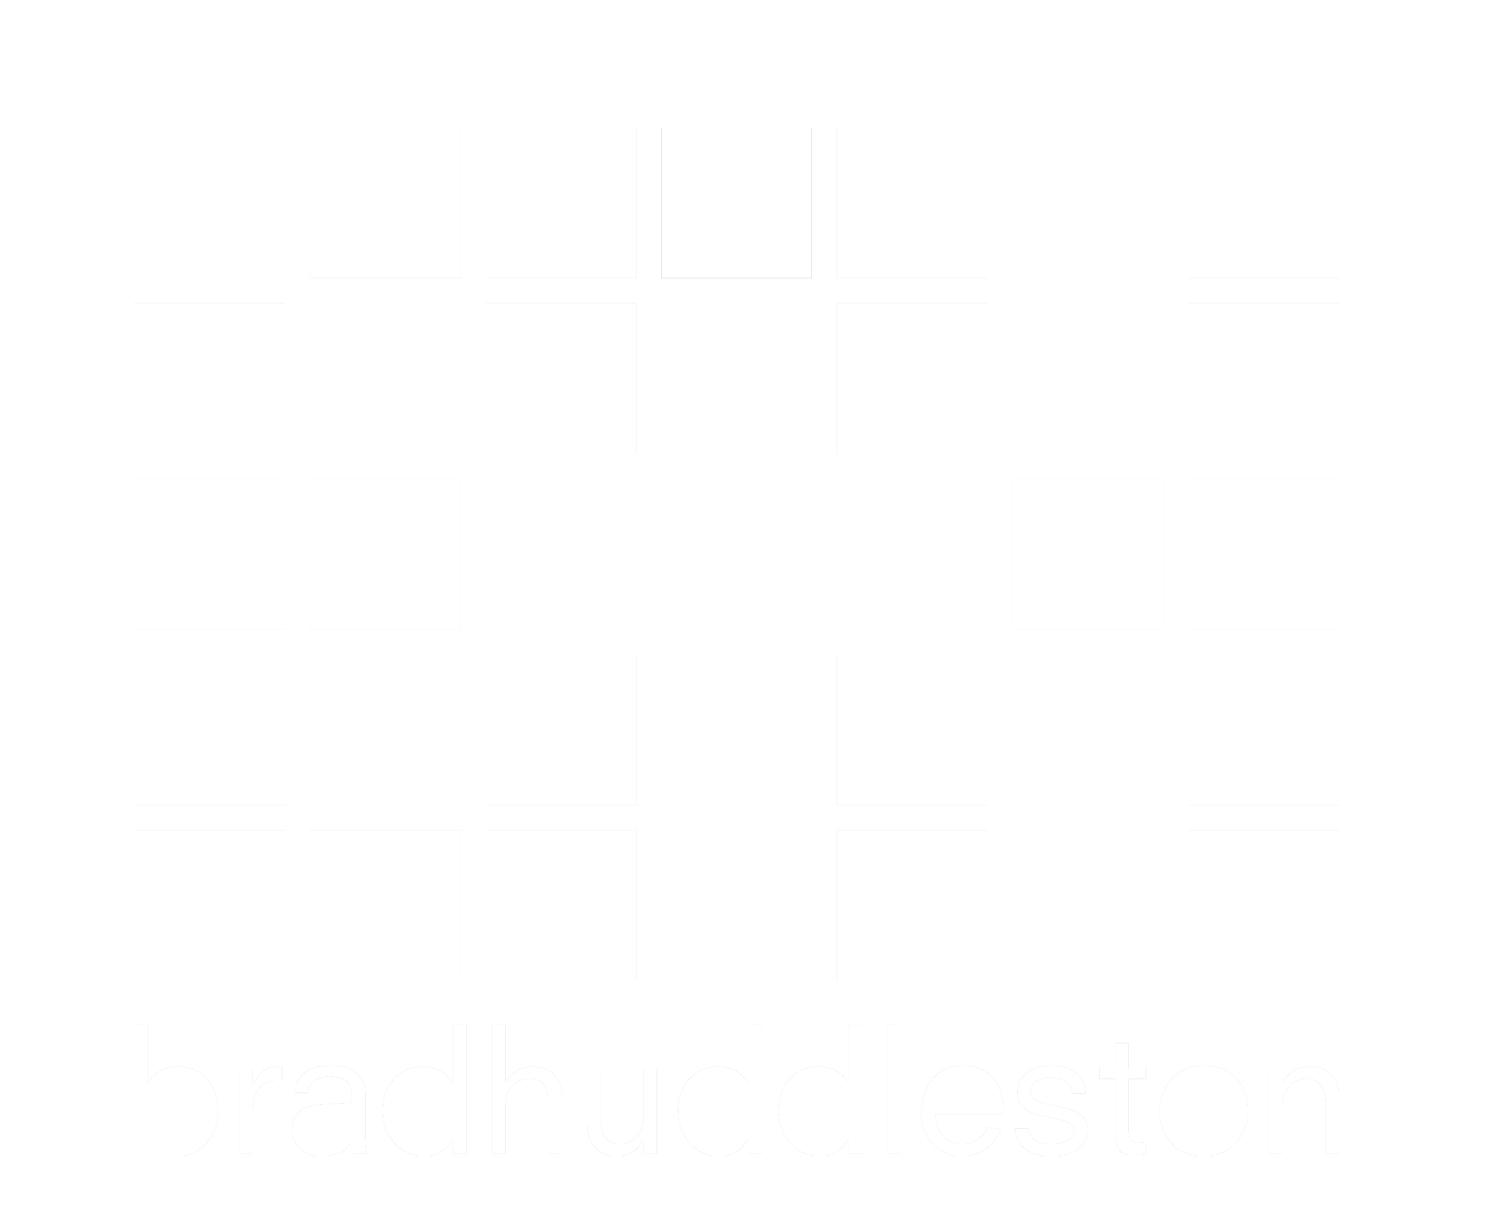  Brad Huddleston Ministries